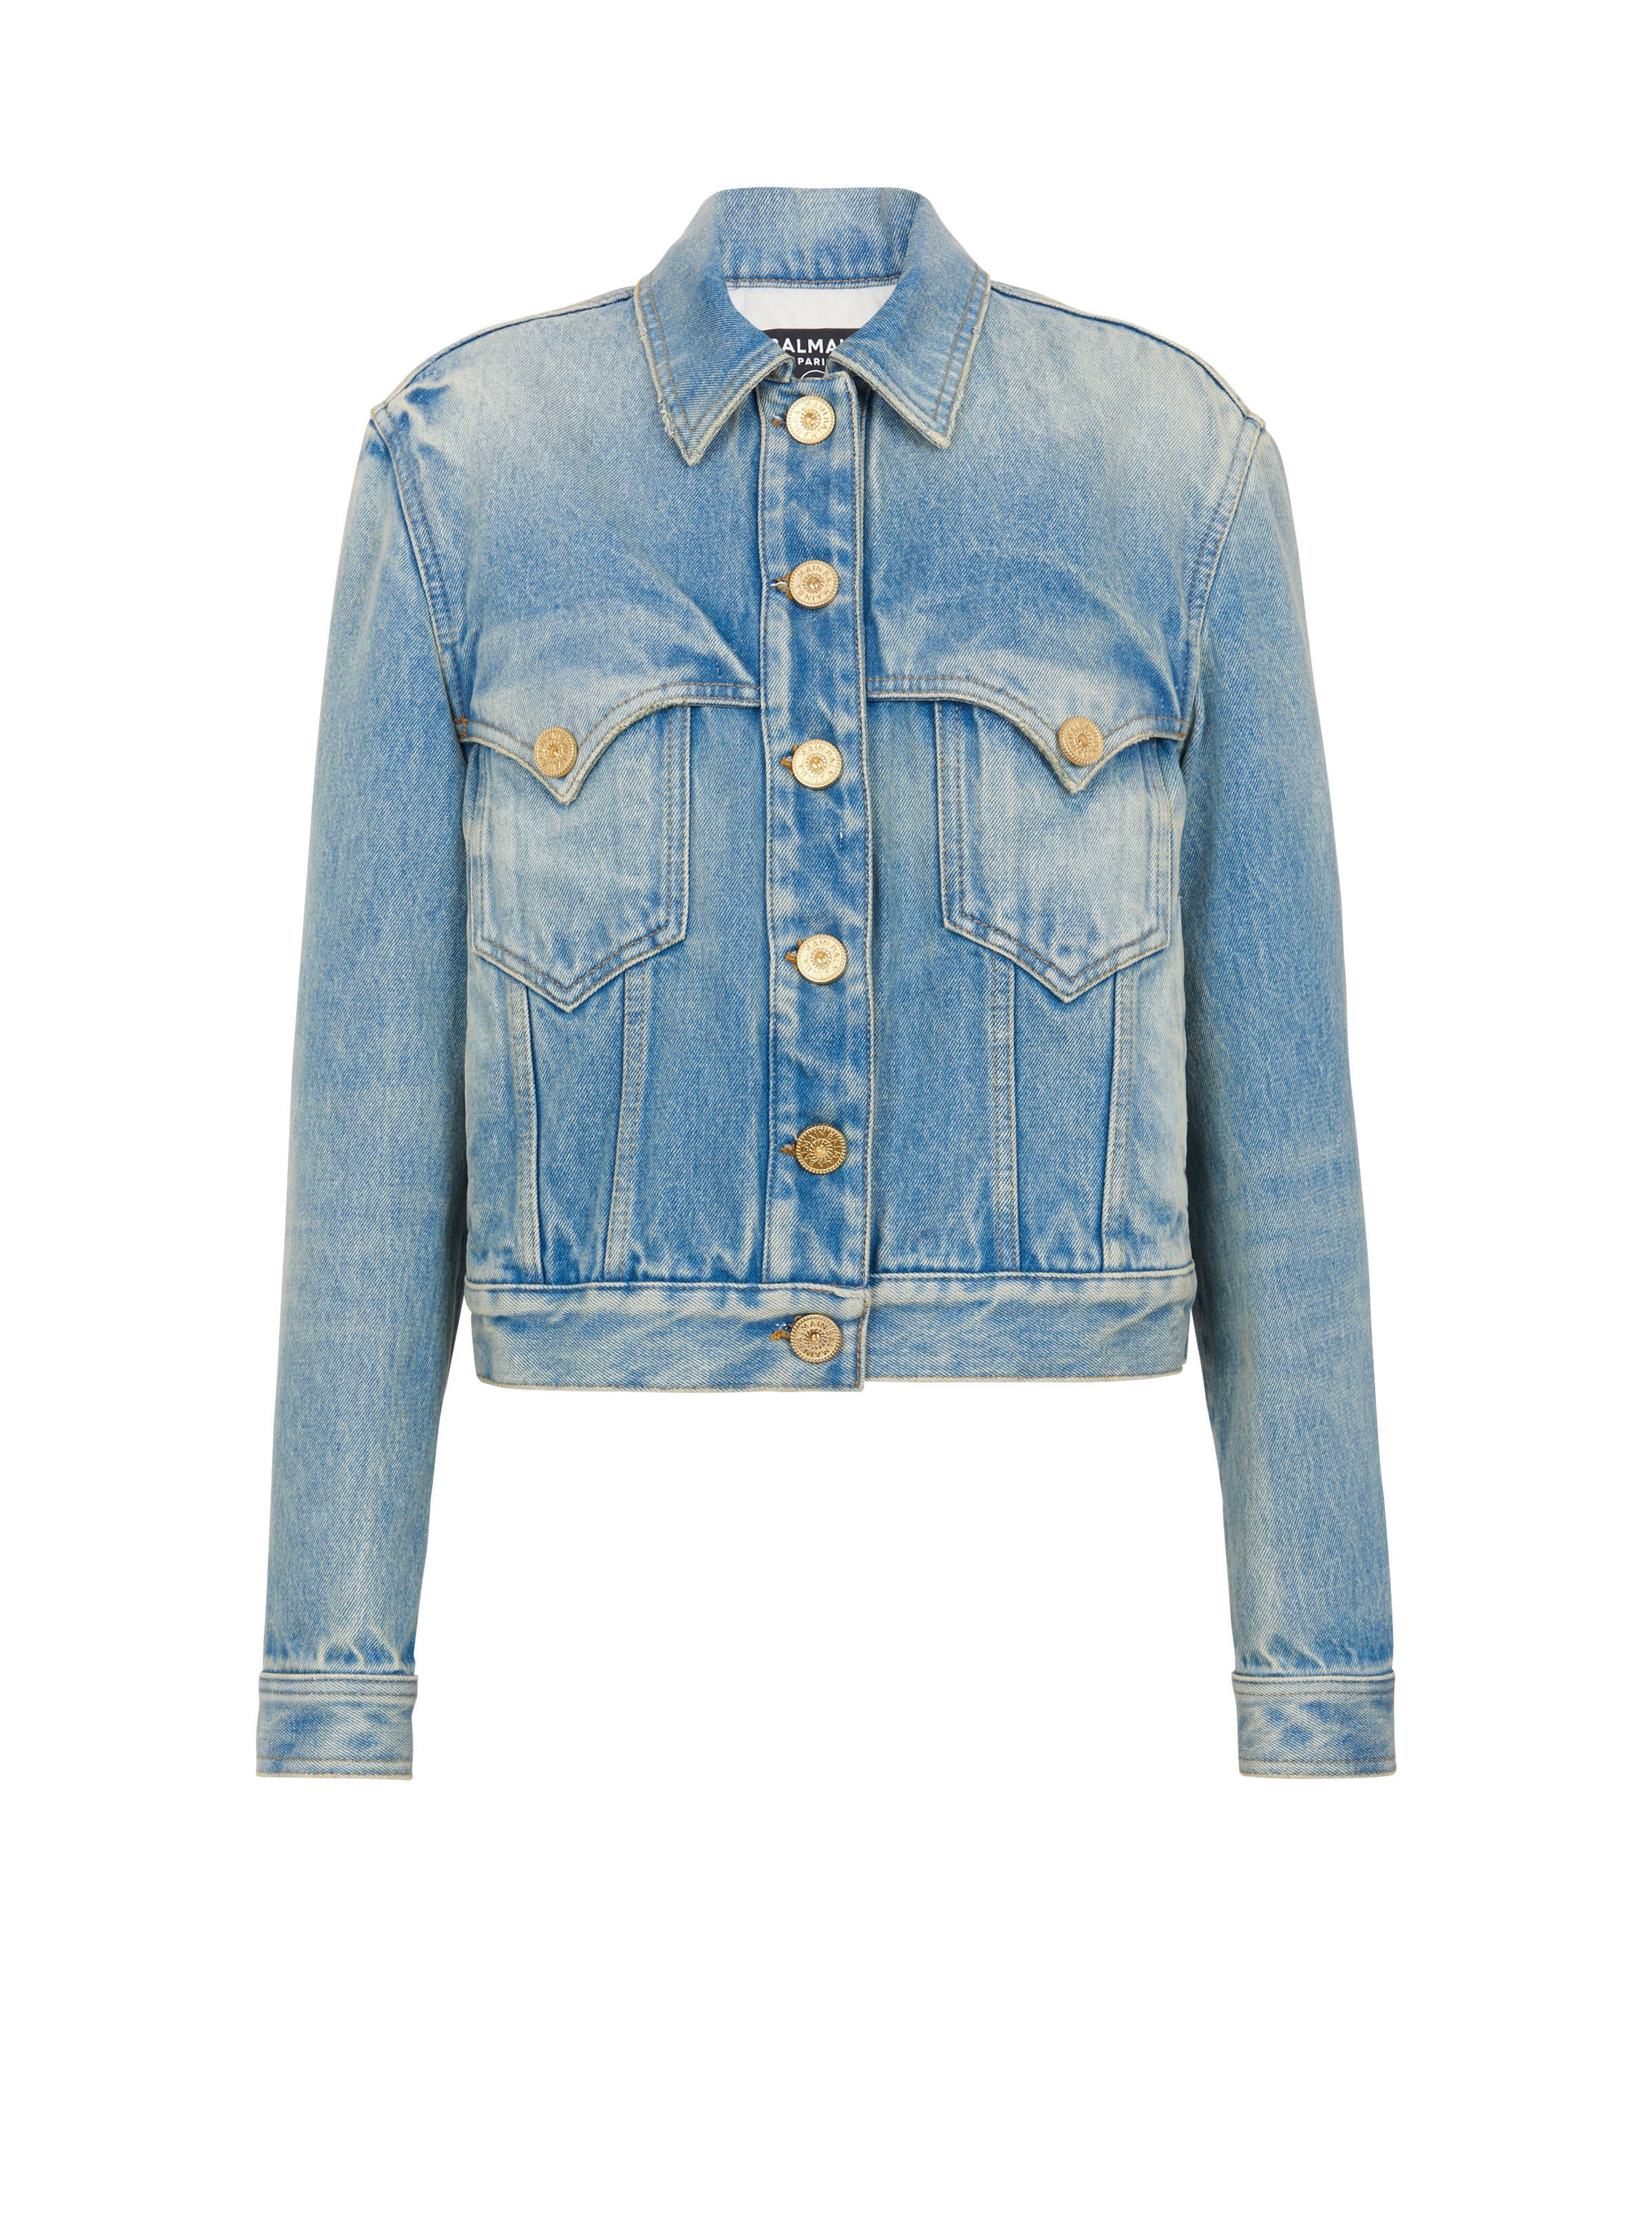 Vintage denim jacket - 1